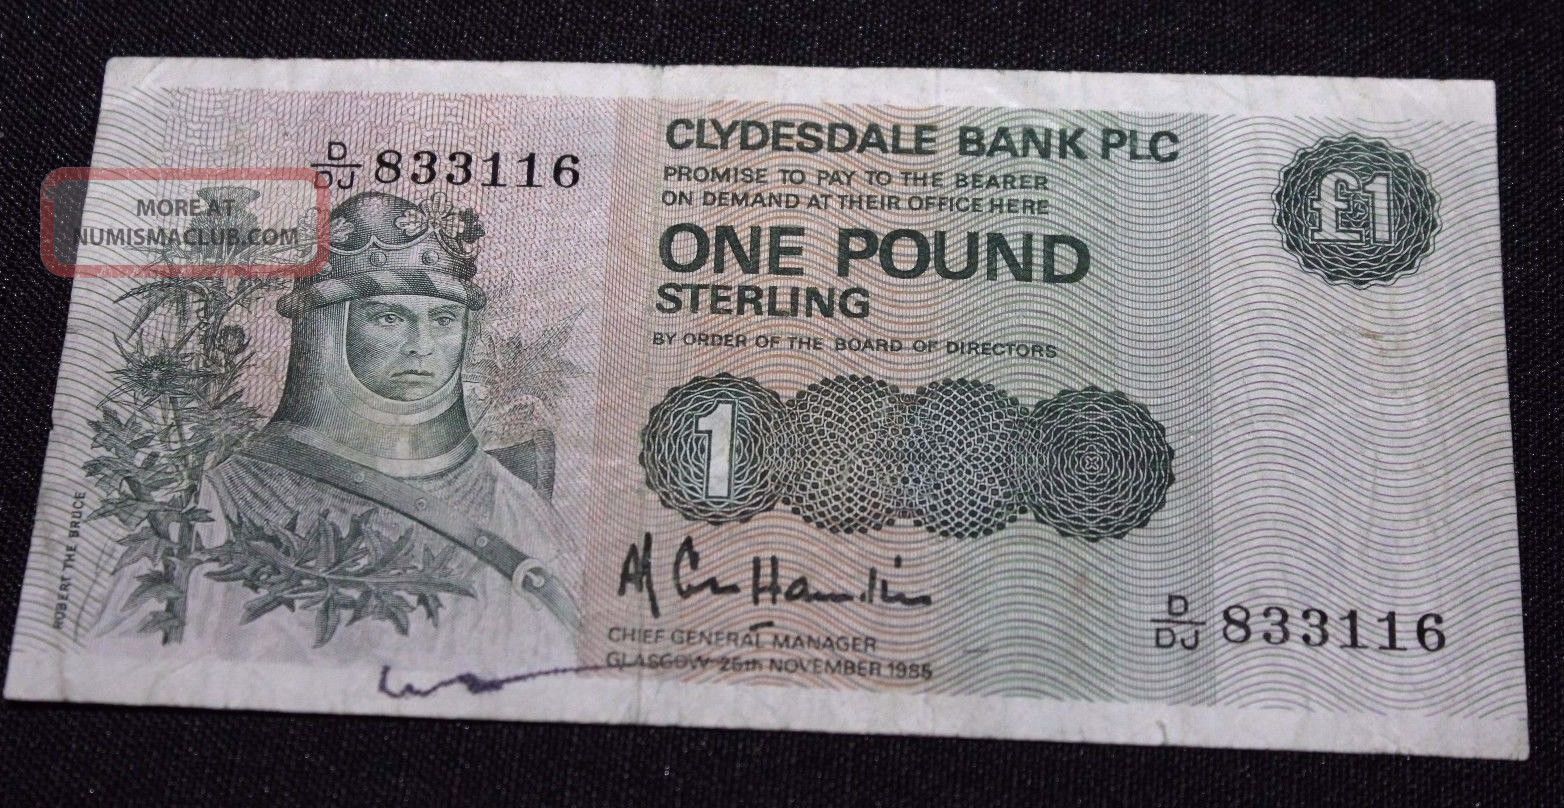 1985 Scotland Clydesdale Bank Limited One Pound Banknote Prefix D/dj 833116